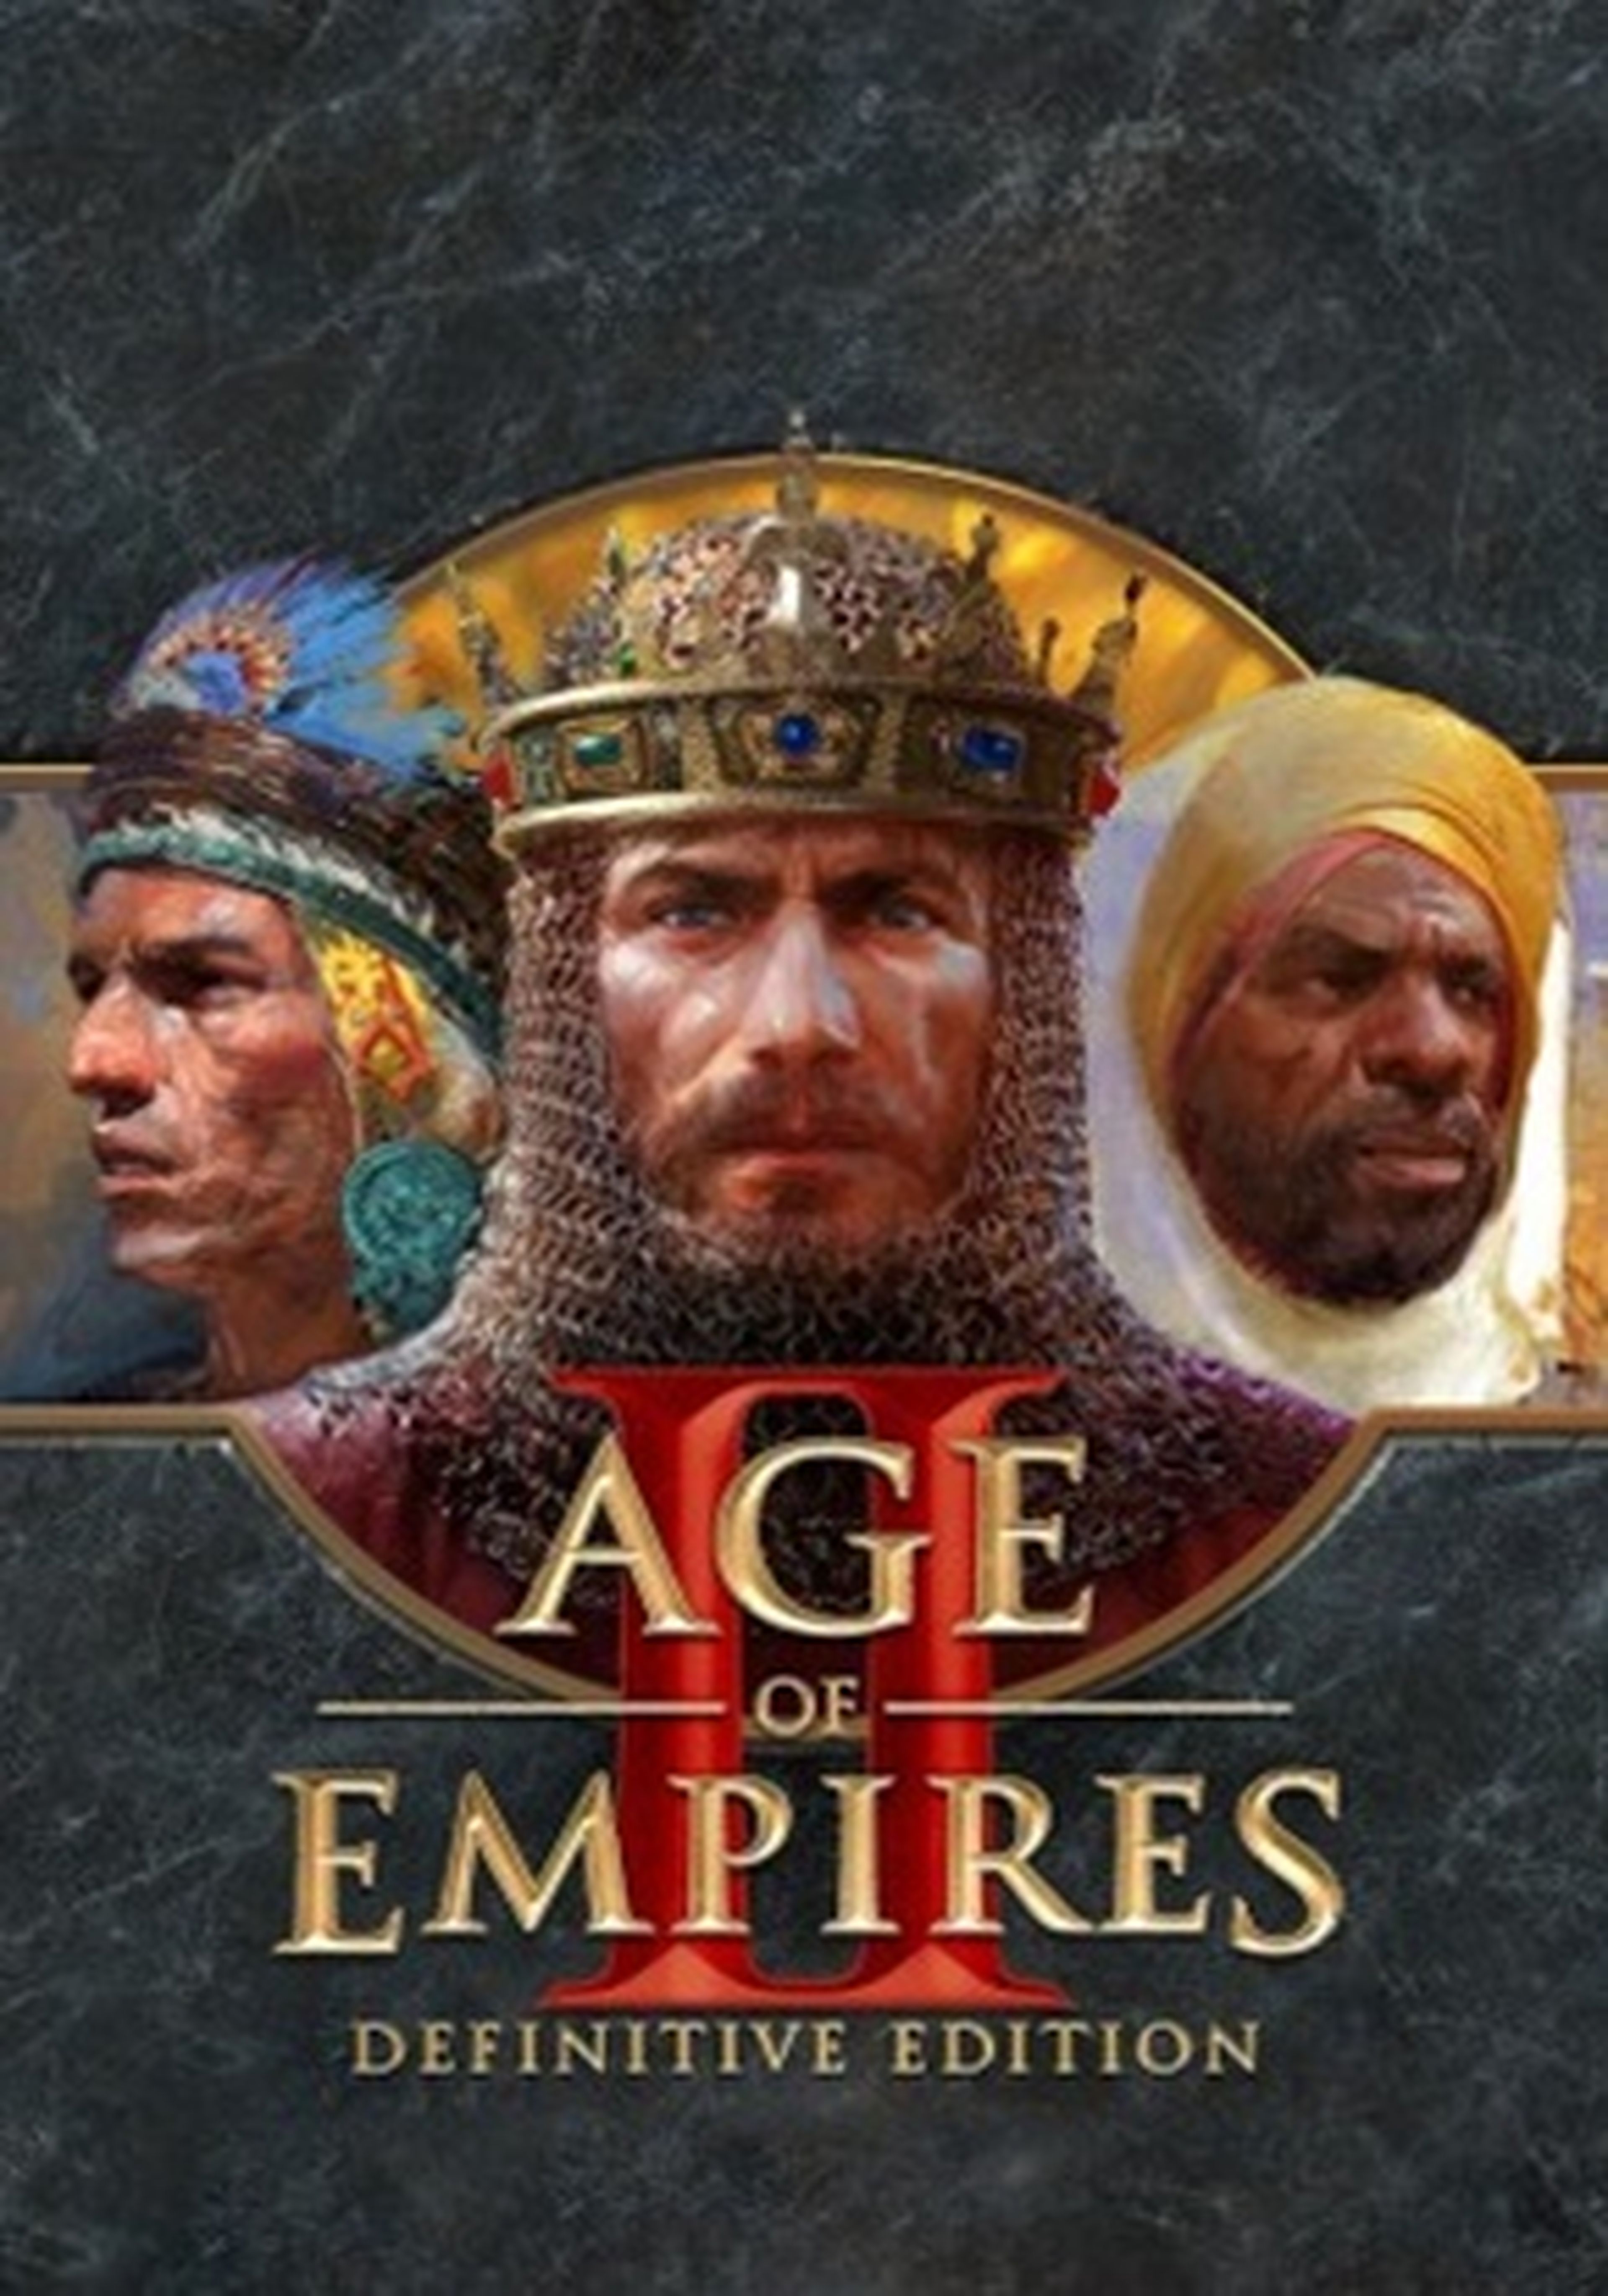 Age of Empires II Definitive Edition cartel